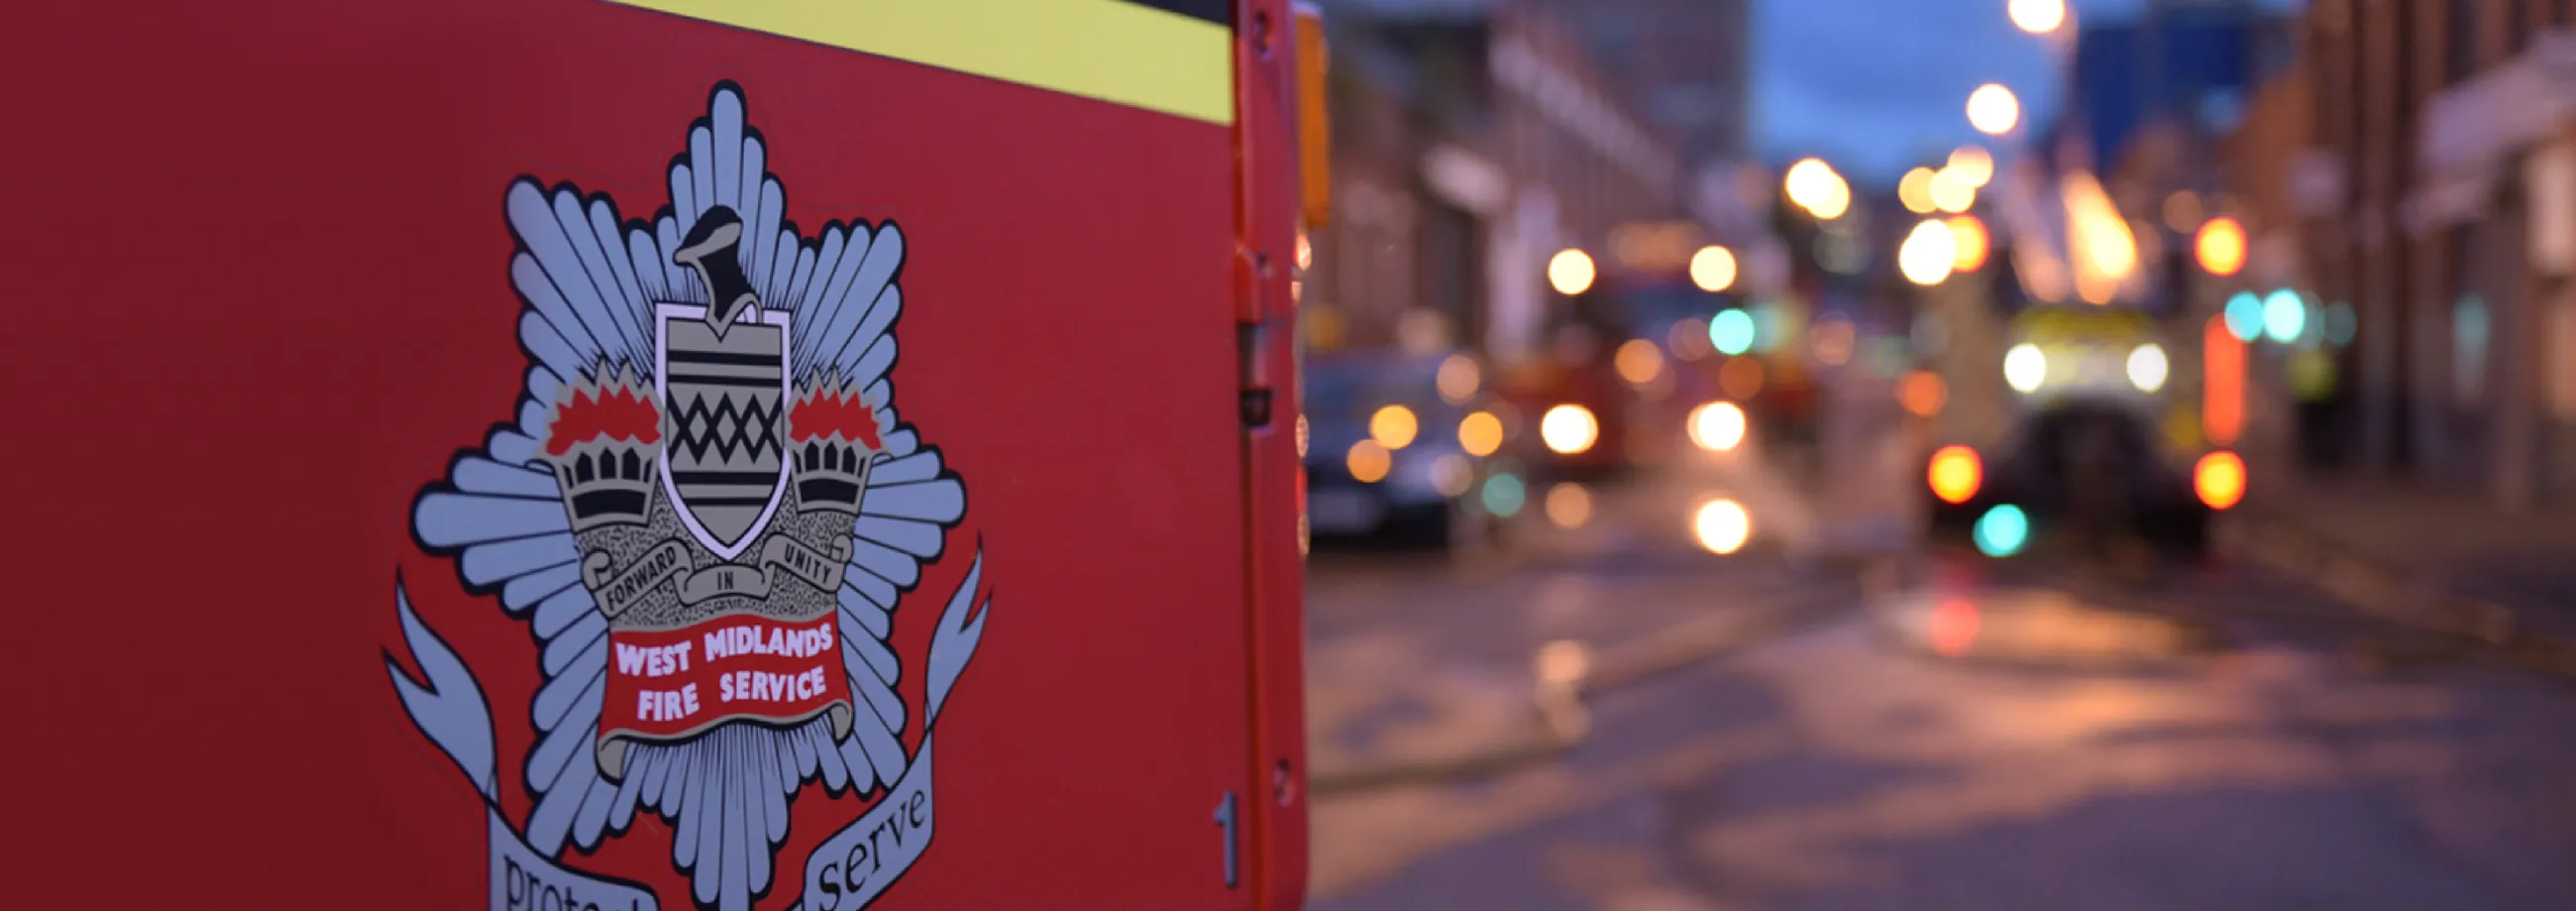 Fire Service logo on fire engine